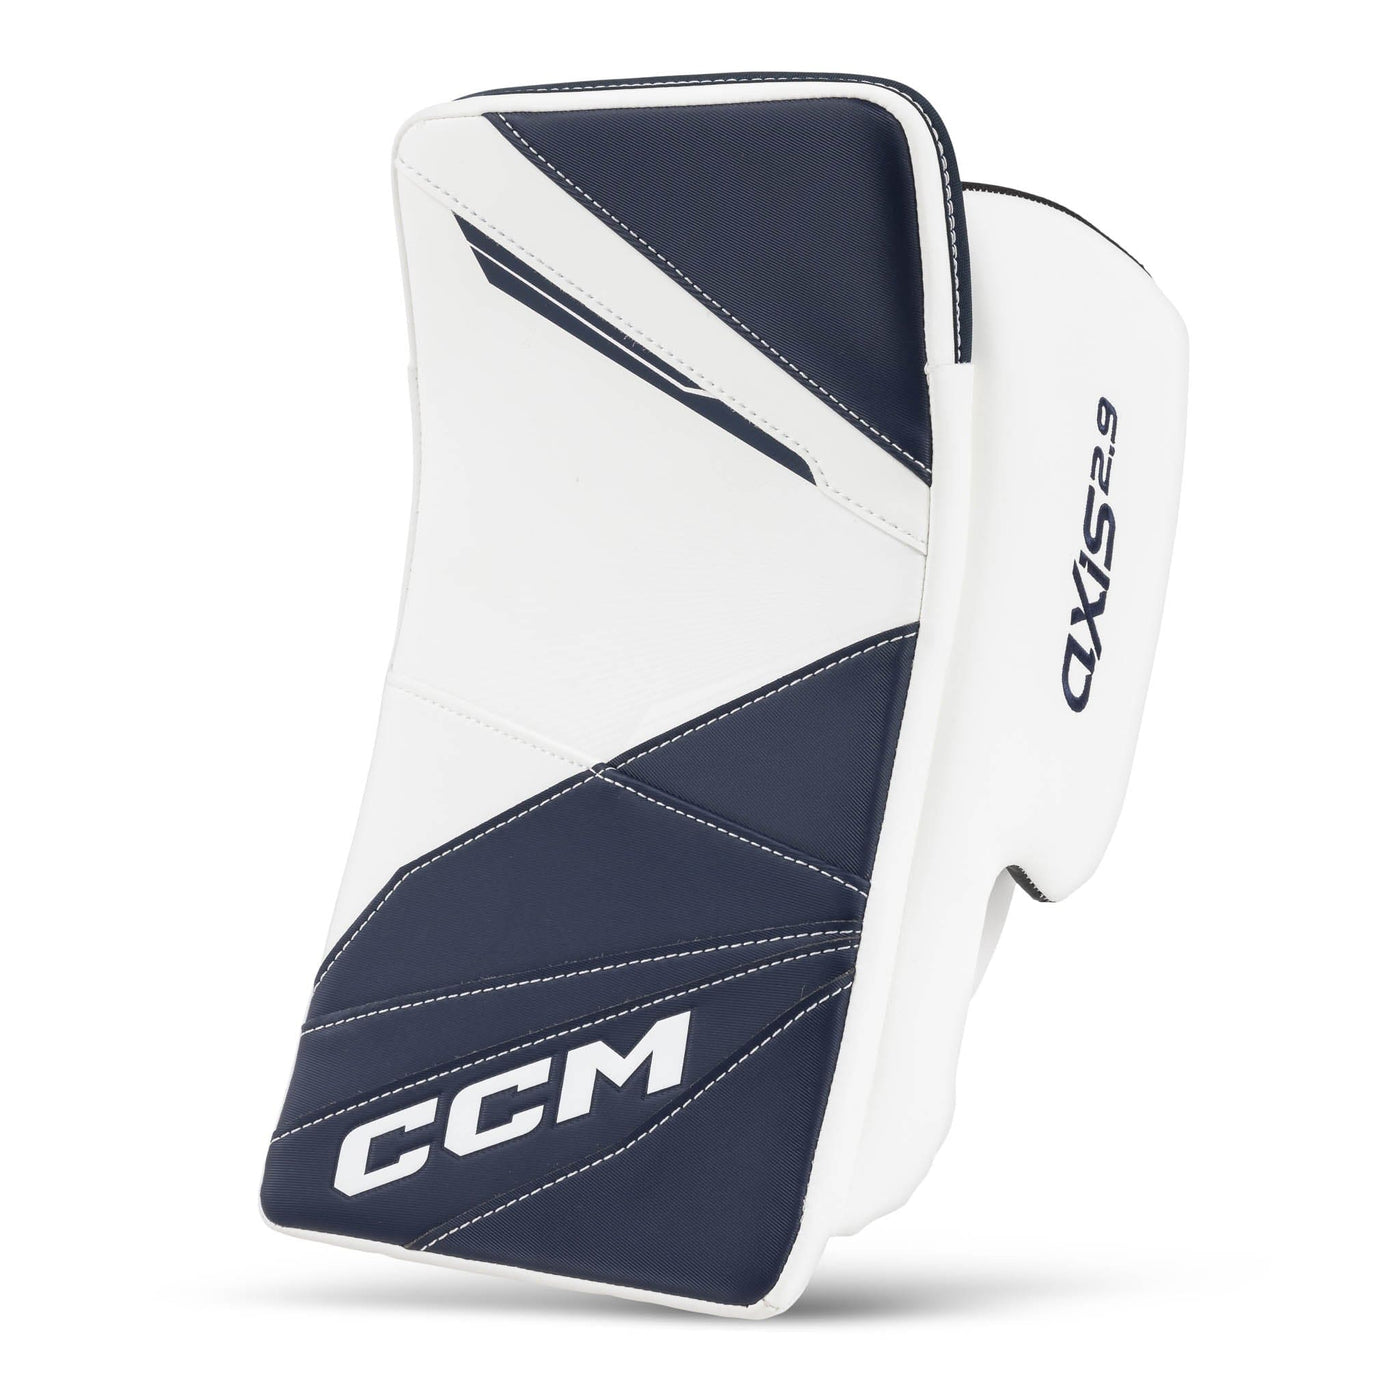 CCM Axis 2.9 Senior Goalie Blocker - The Hockey Shop Source For Sports